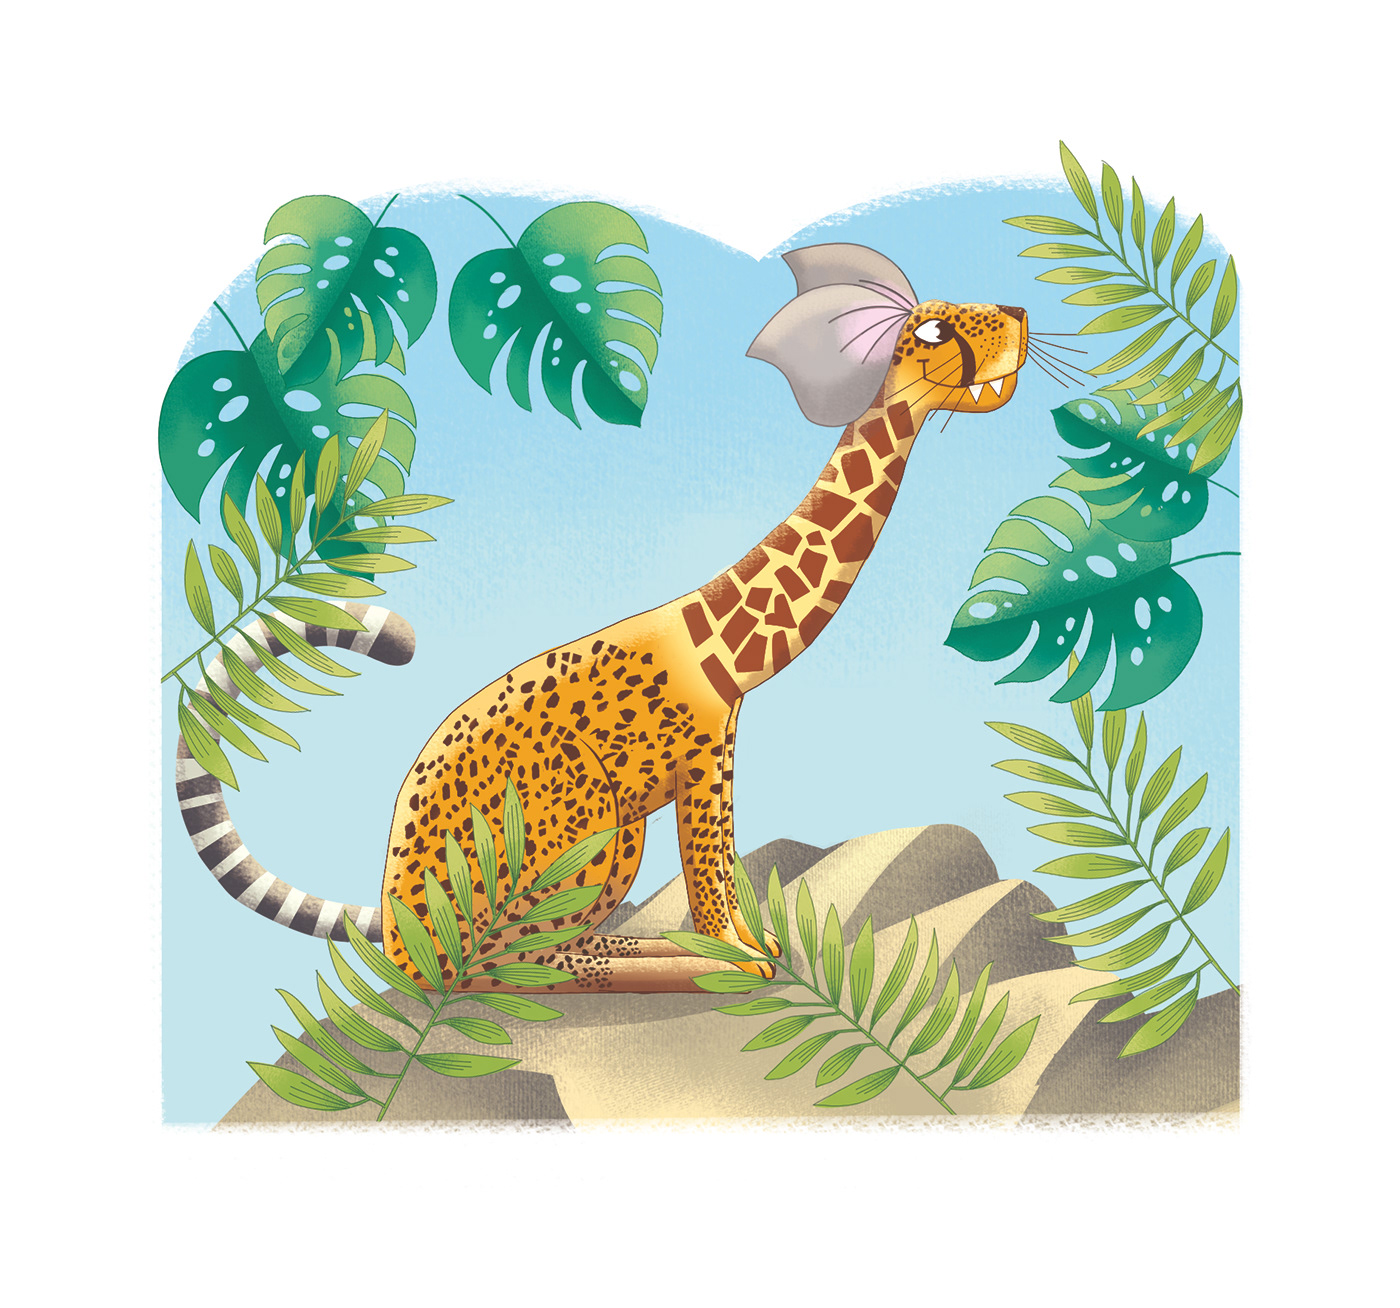 Image may contain: illustration, animal and giraffe